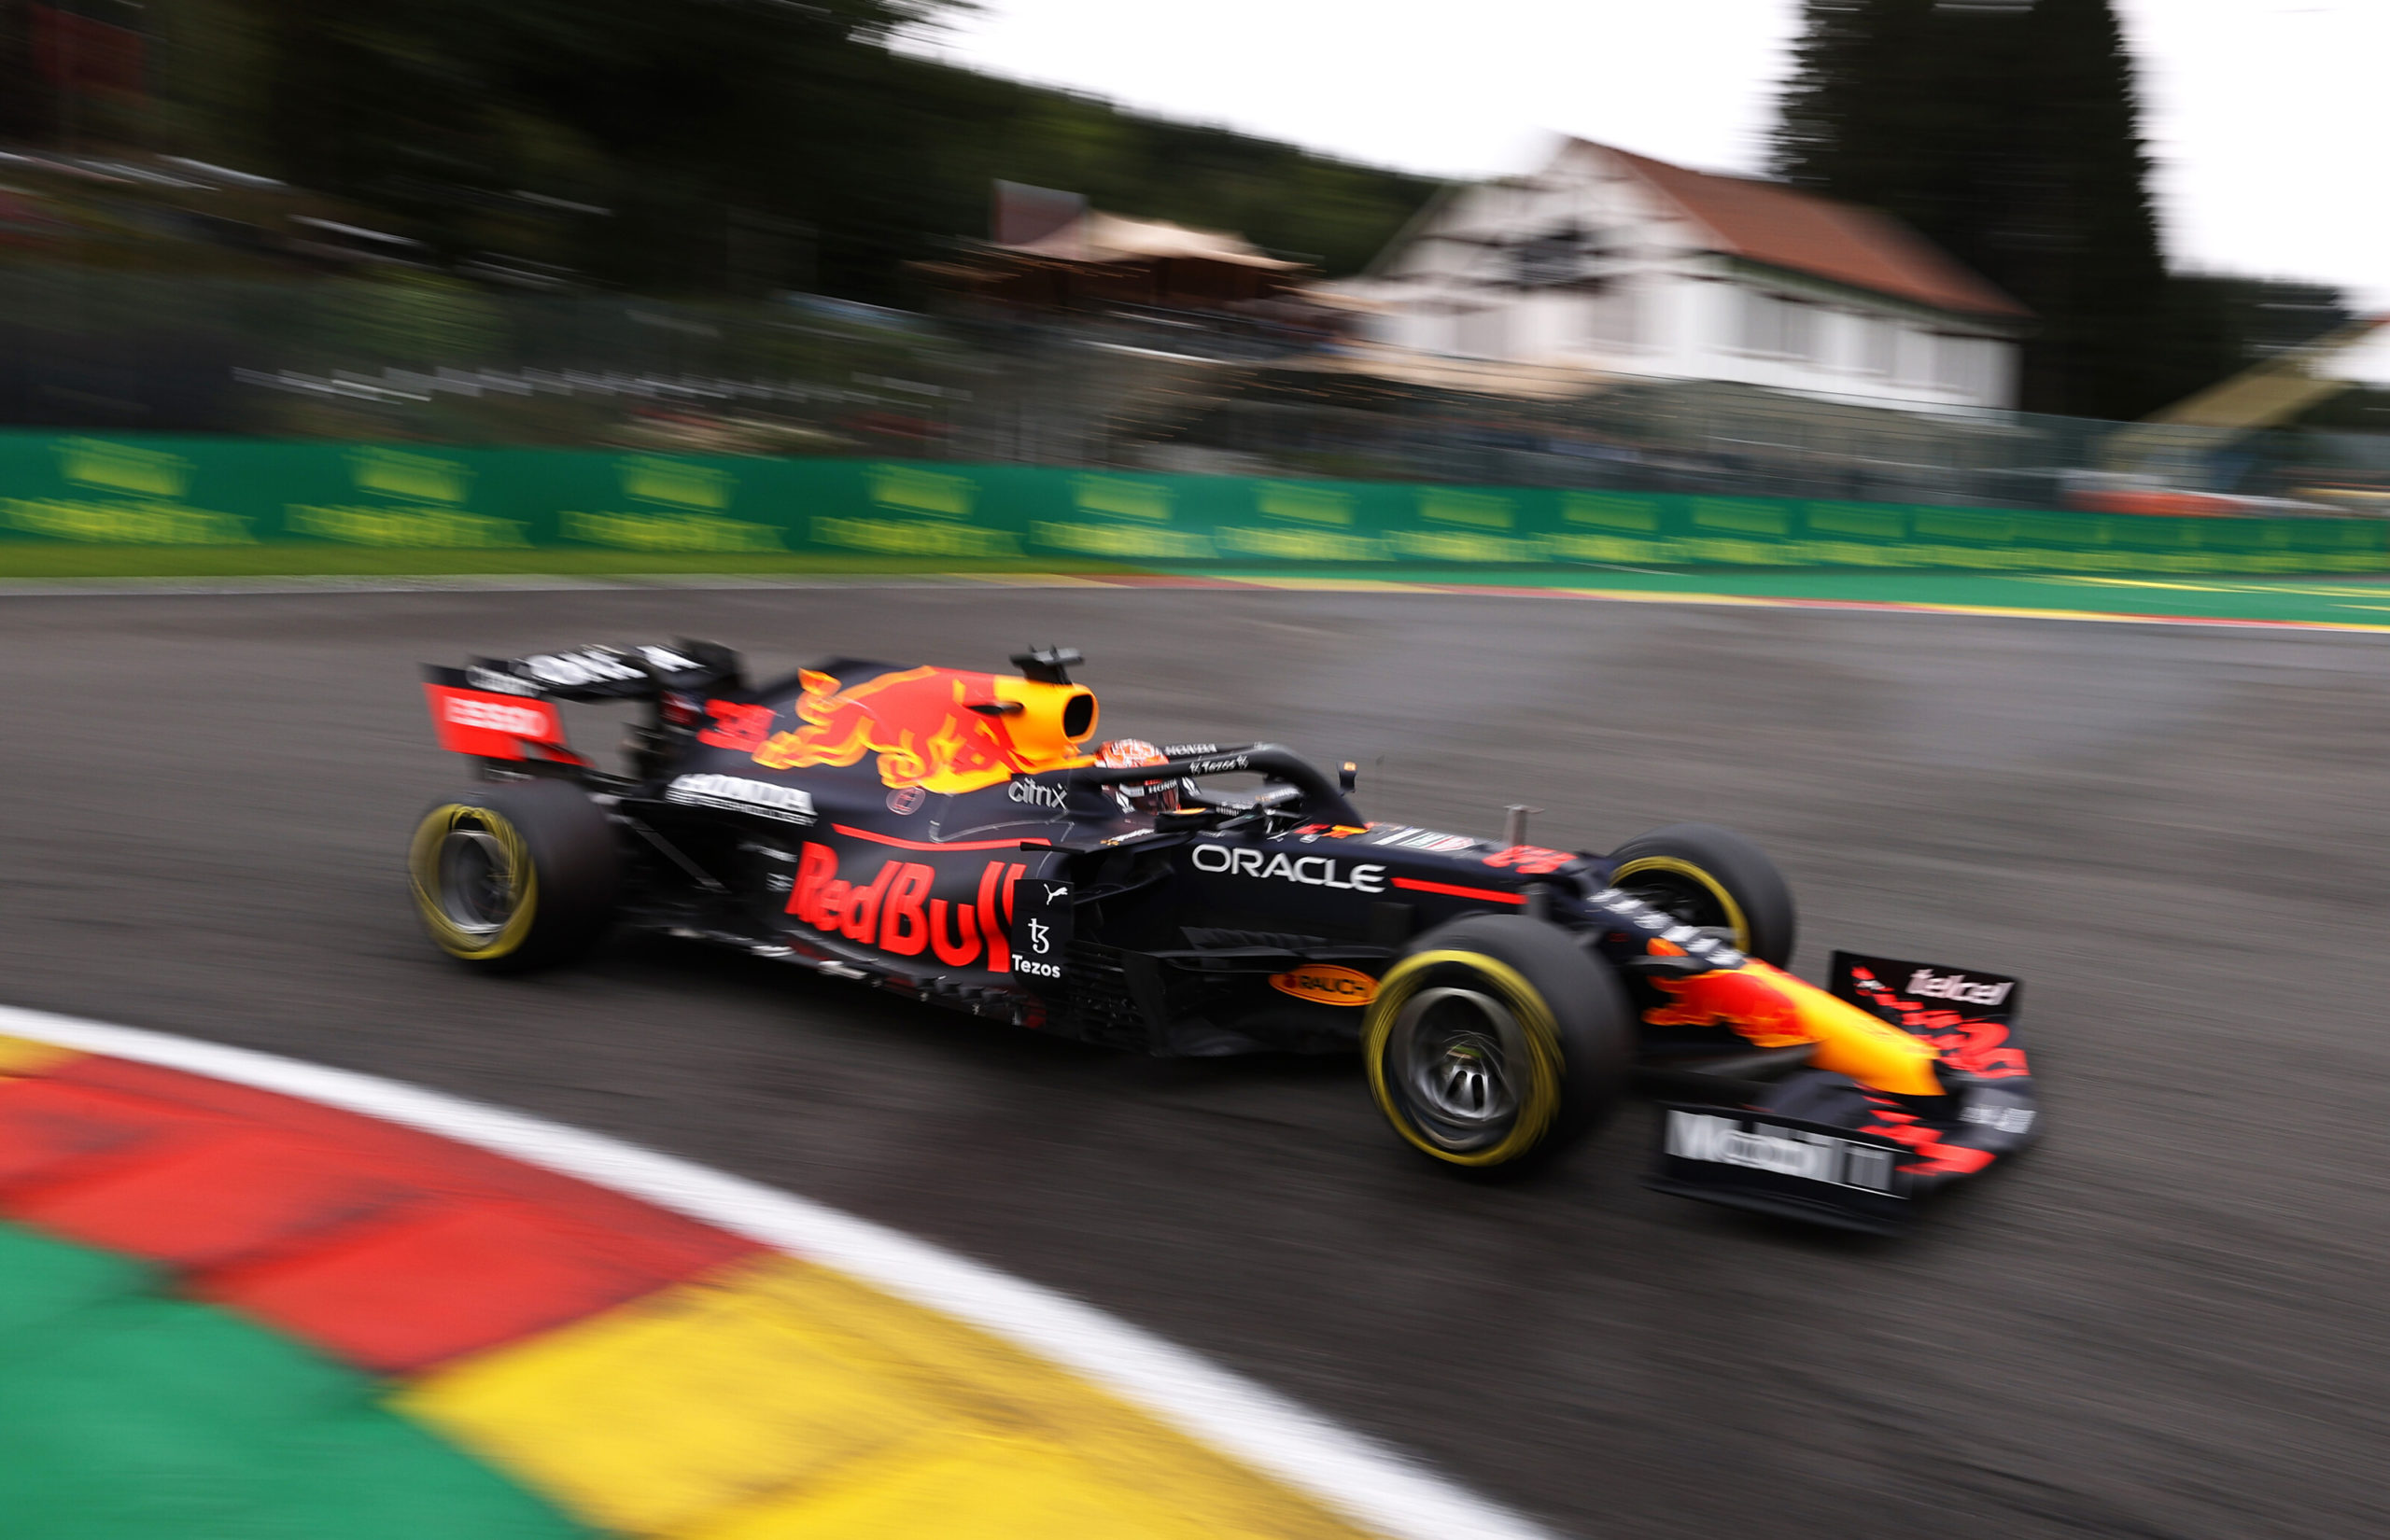 2021 Belgian Grand Prix, Friday - Max Verstappen (image courtesy Red Bull Racing)